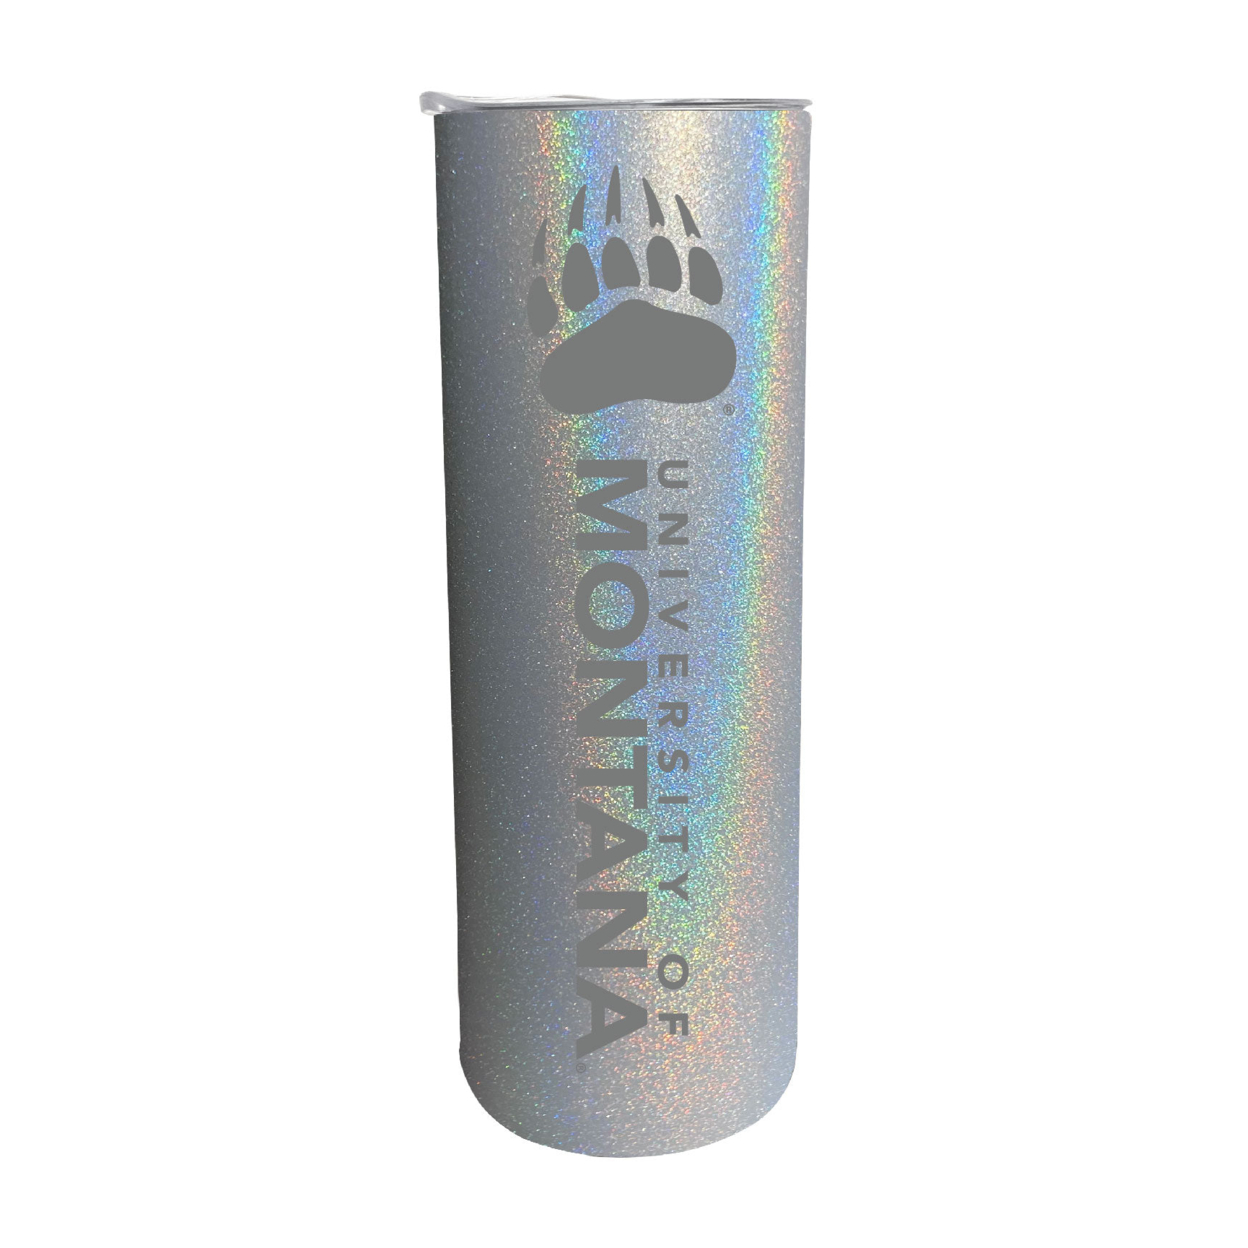 Montana University 20oz Insulated Stainless Steel Skinny Tumbler - Rainbow Glitter Gray